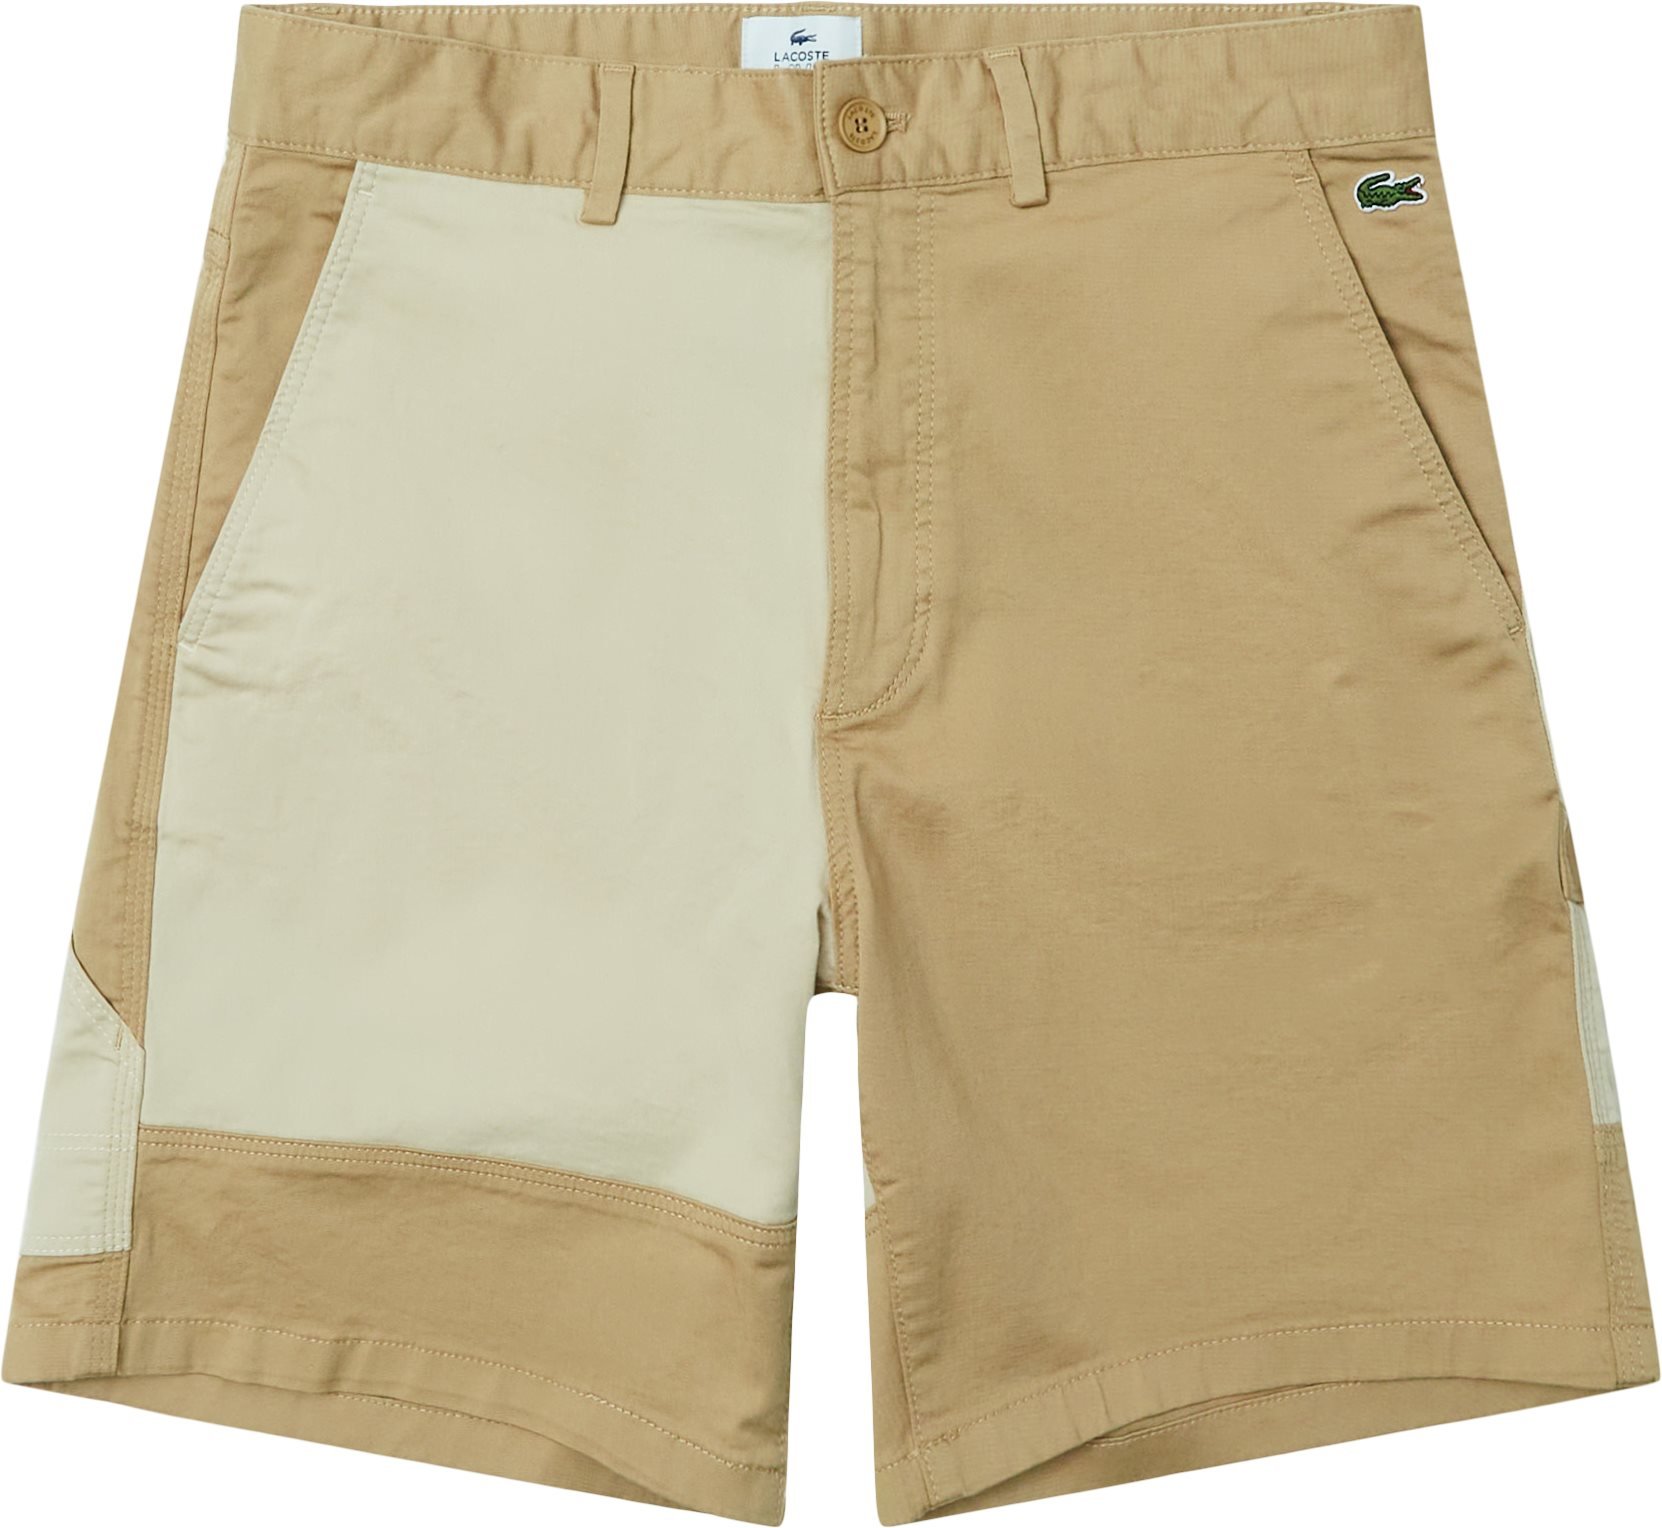 Fh7602 Cargo Shorts - Shorts - Regular fit - Sand